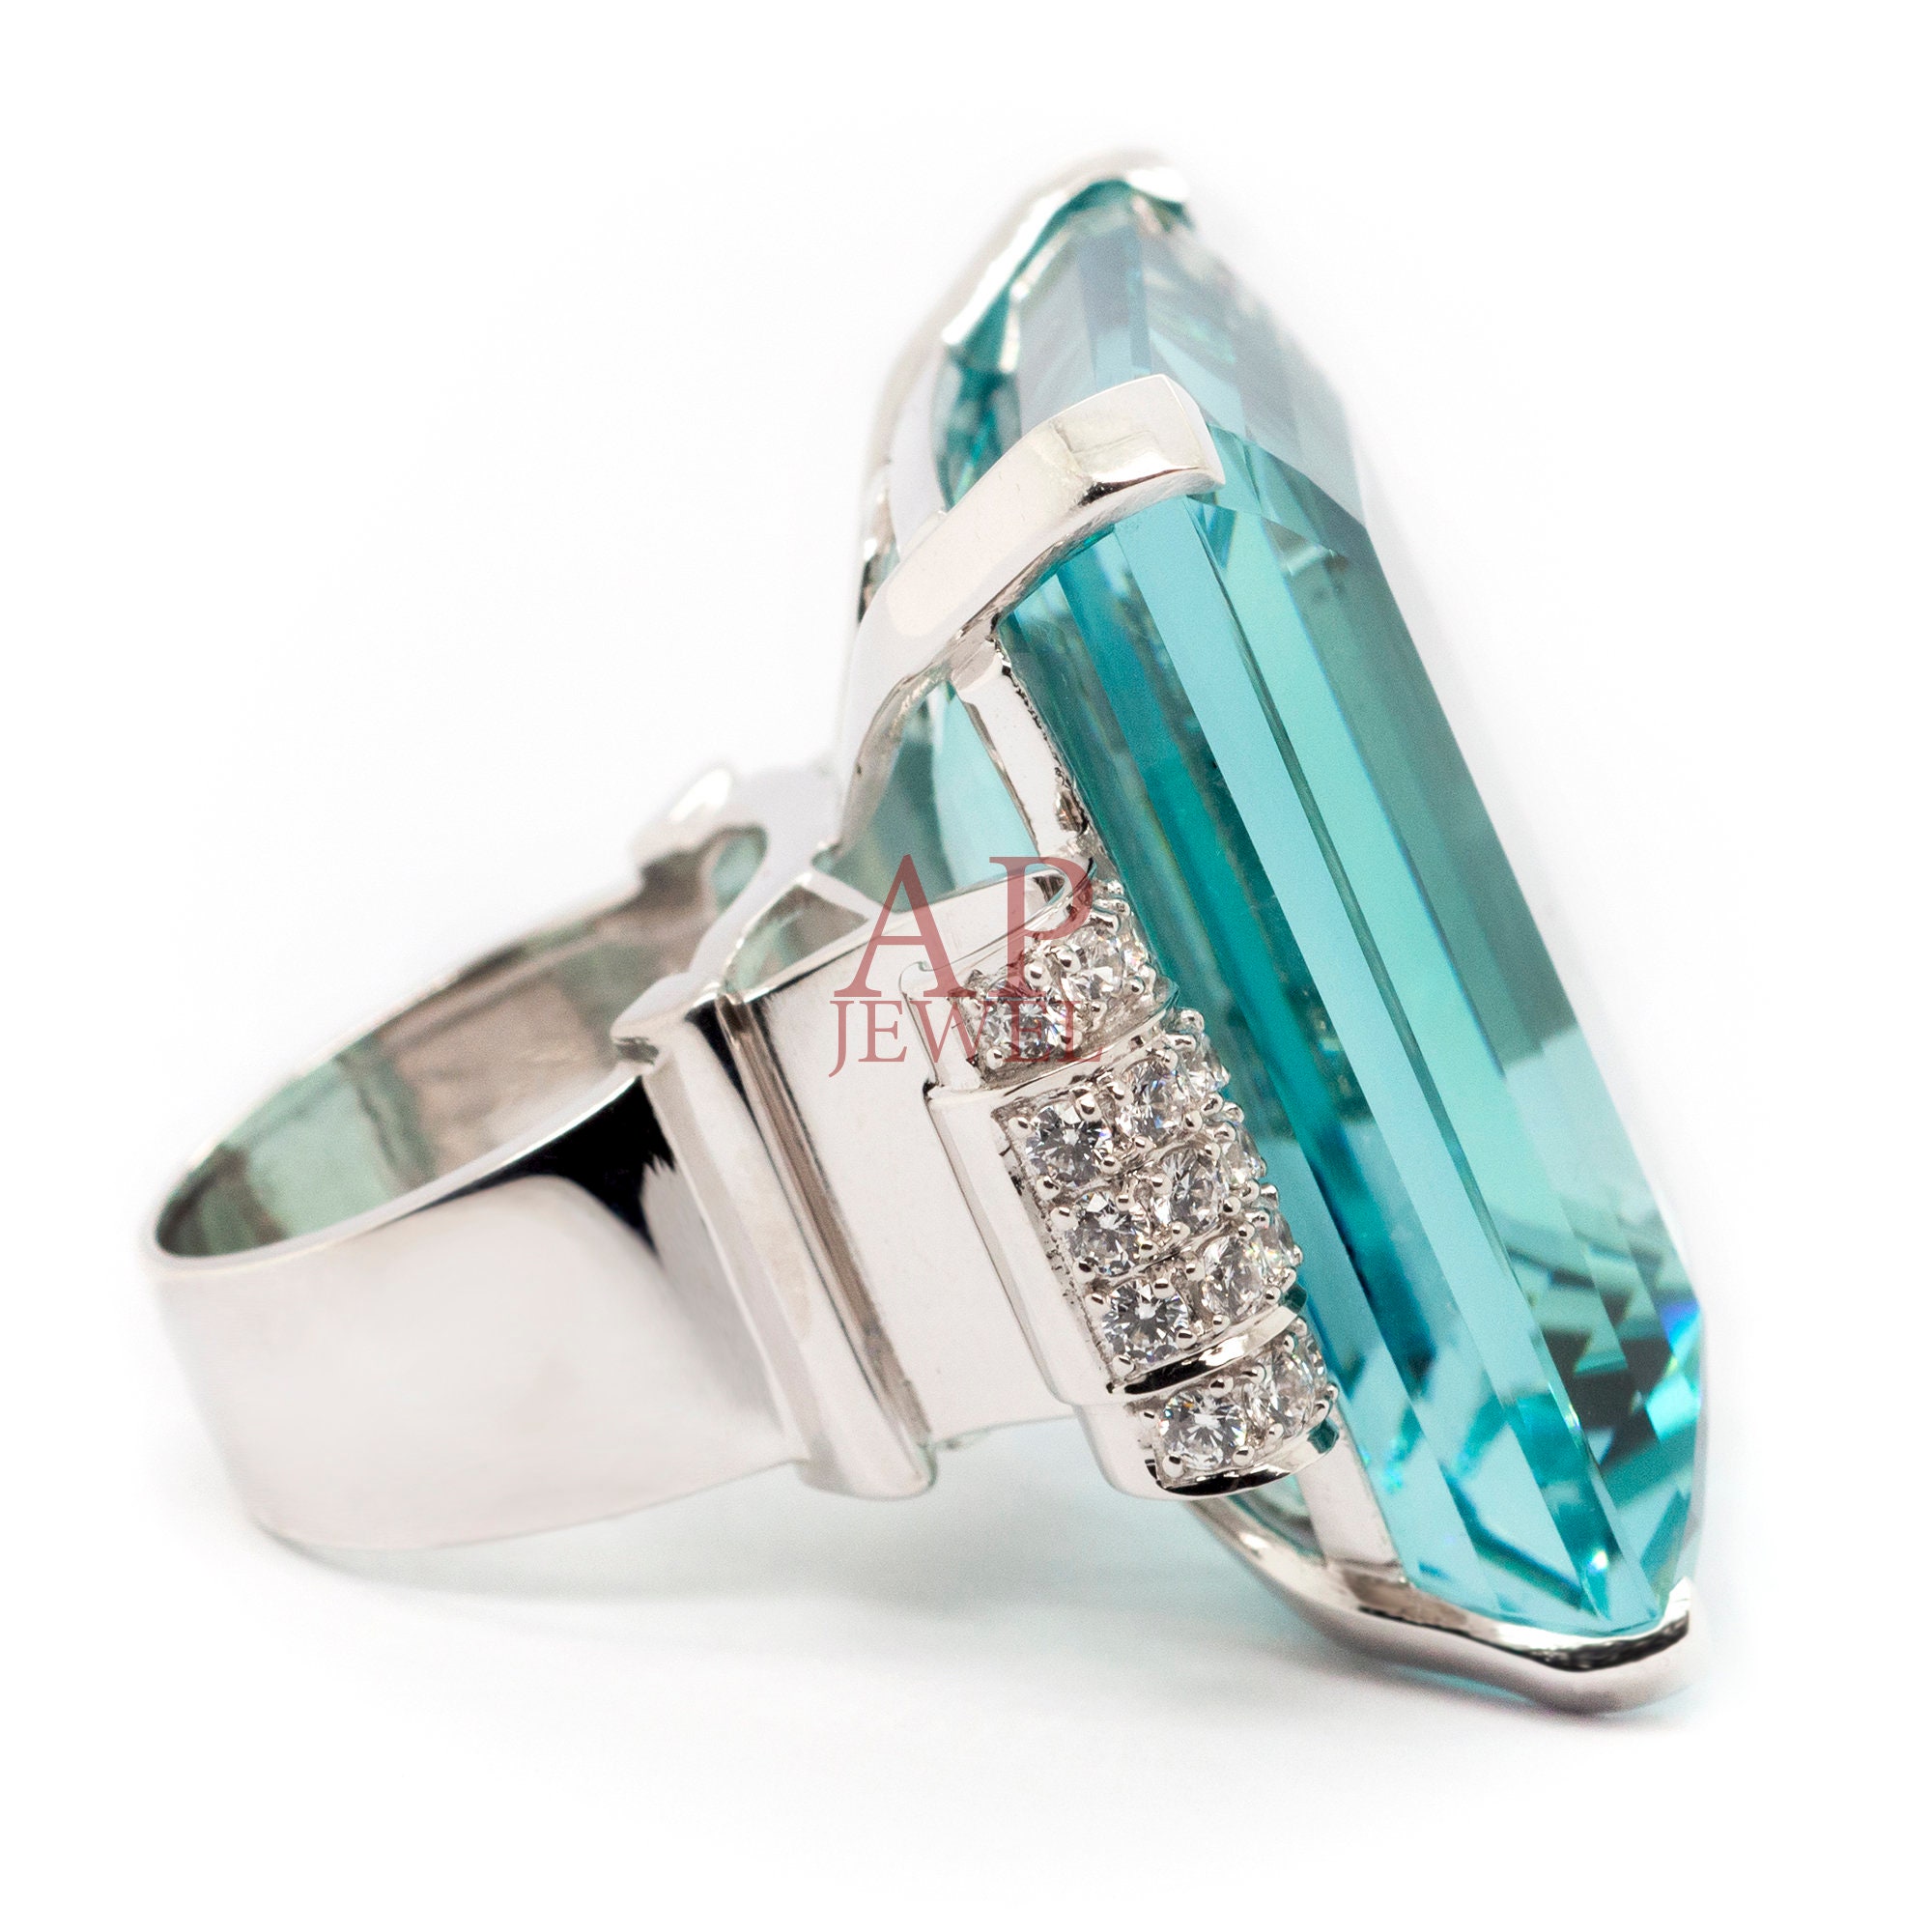 Aquablue Emerald Cut Diamond Cocktail Ring CZ Diamond Silver | Etsy